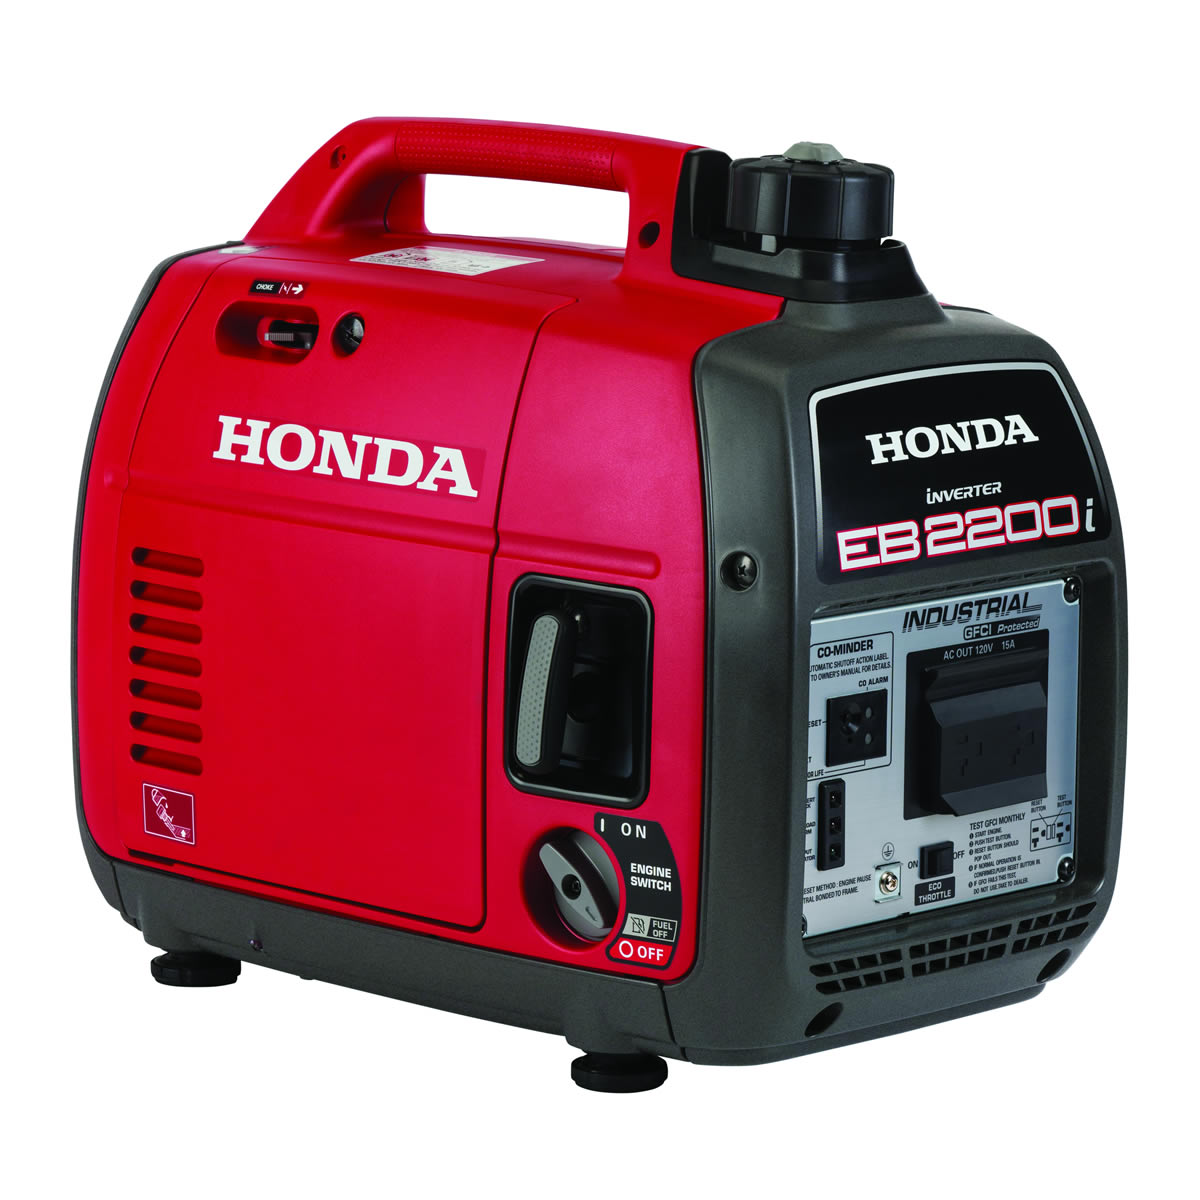 Advantages Of Honda 1000 Watt Generator